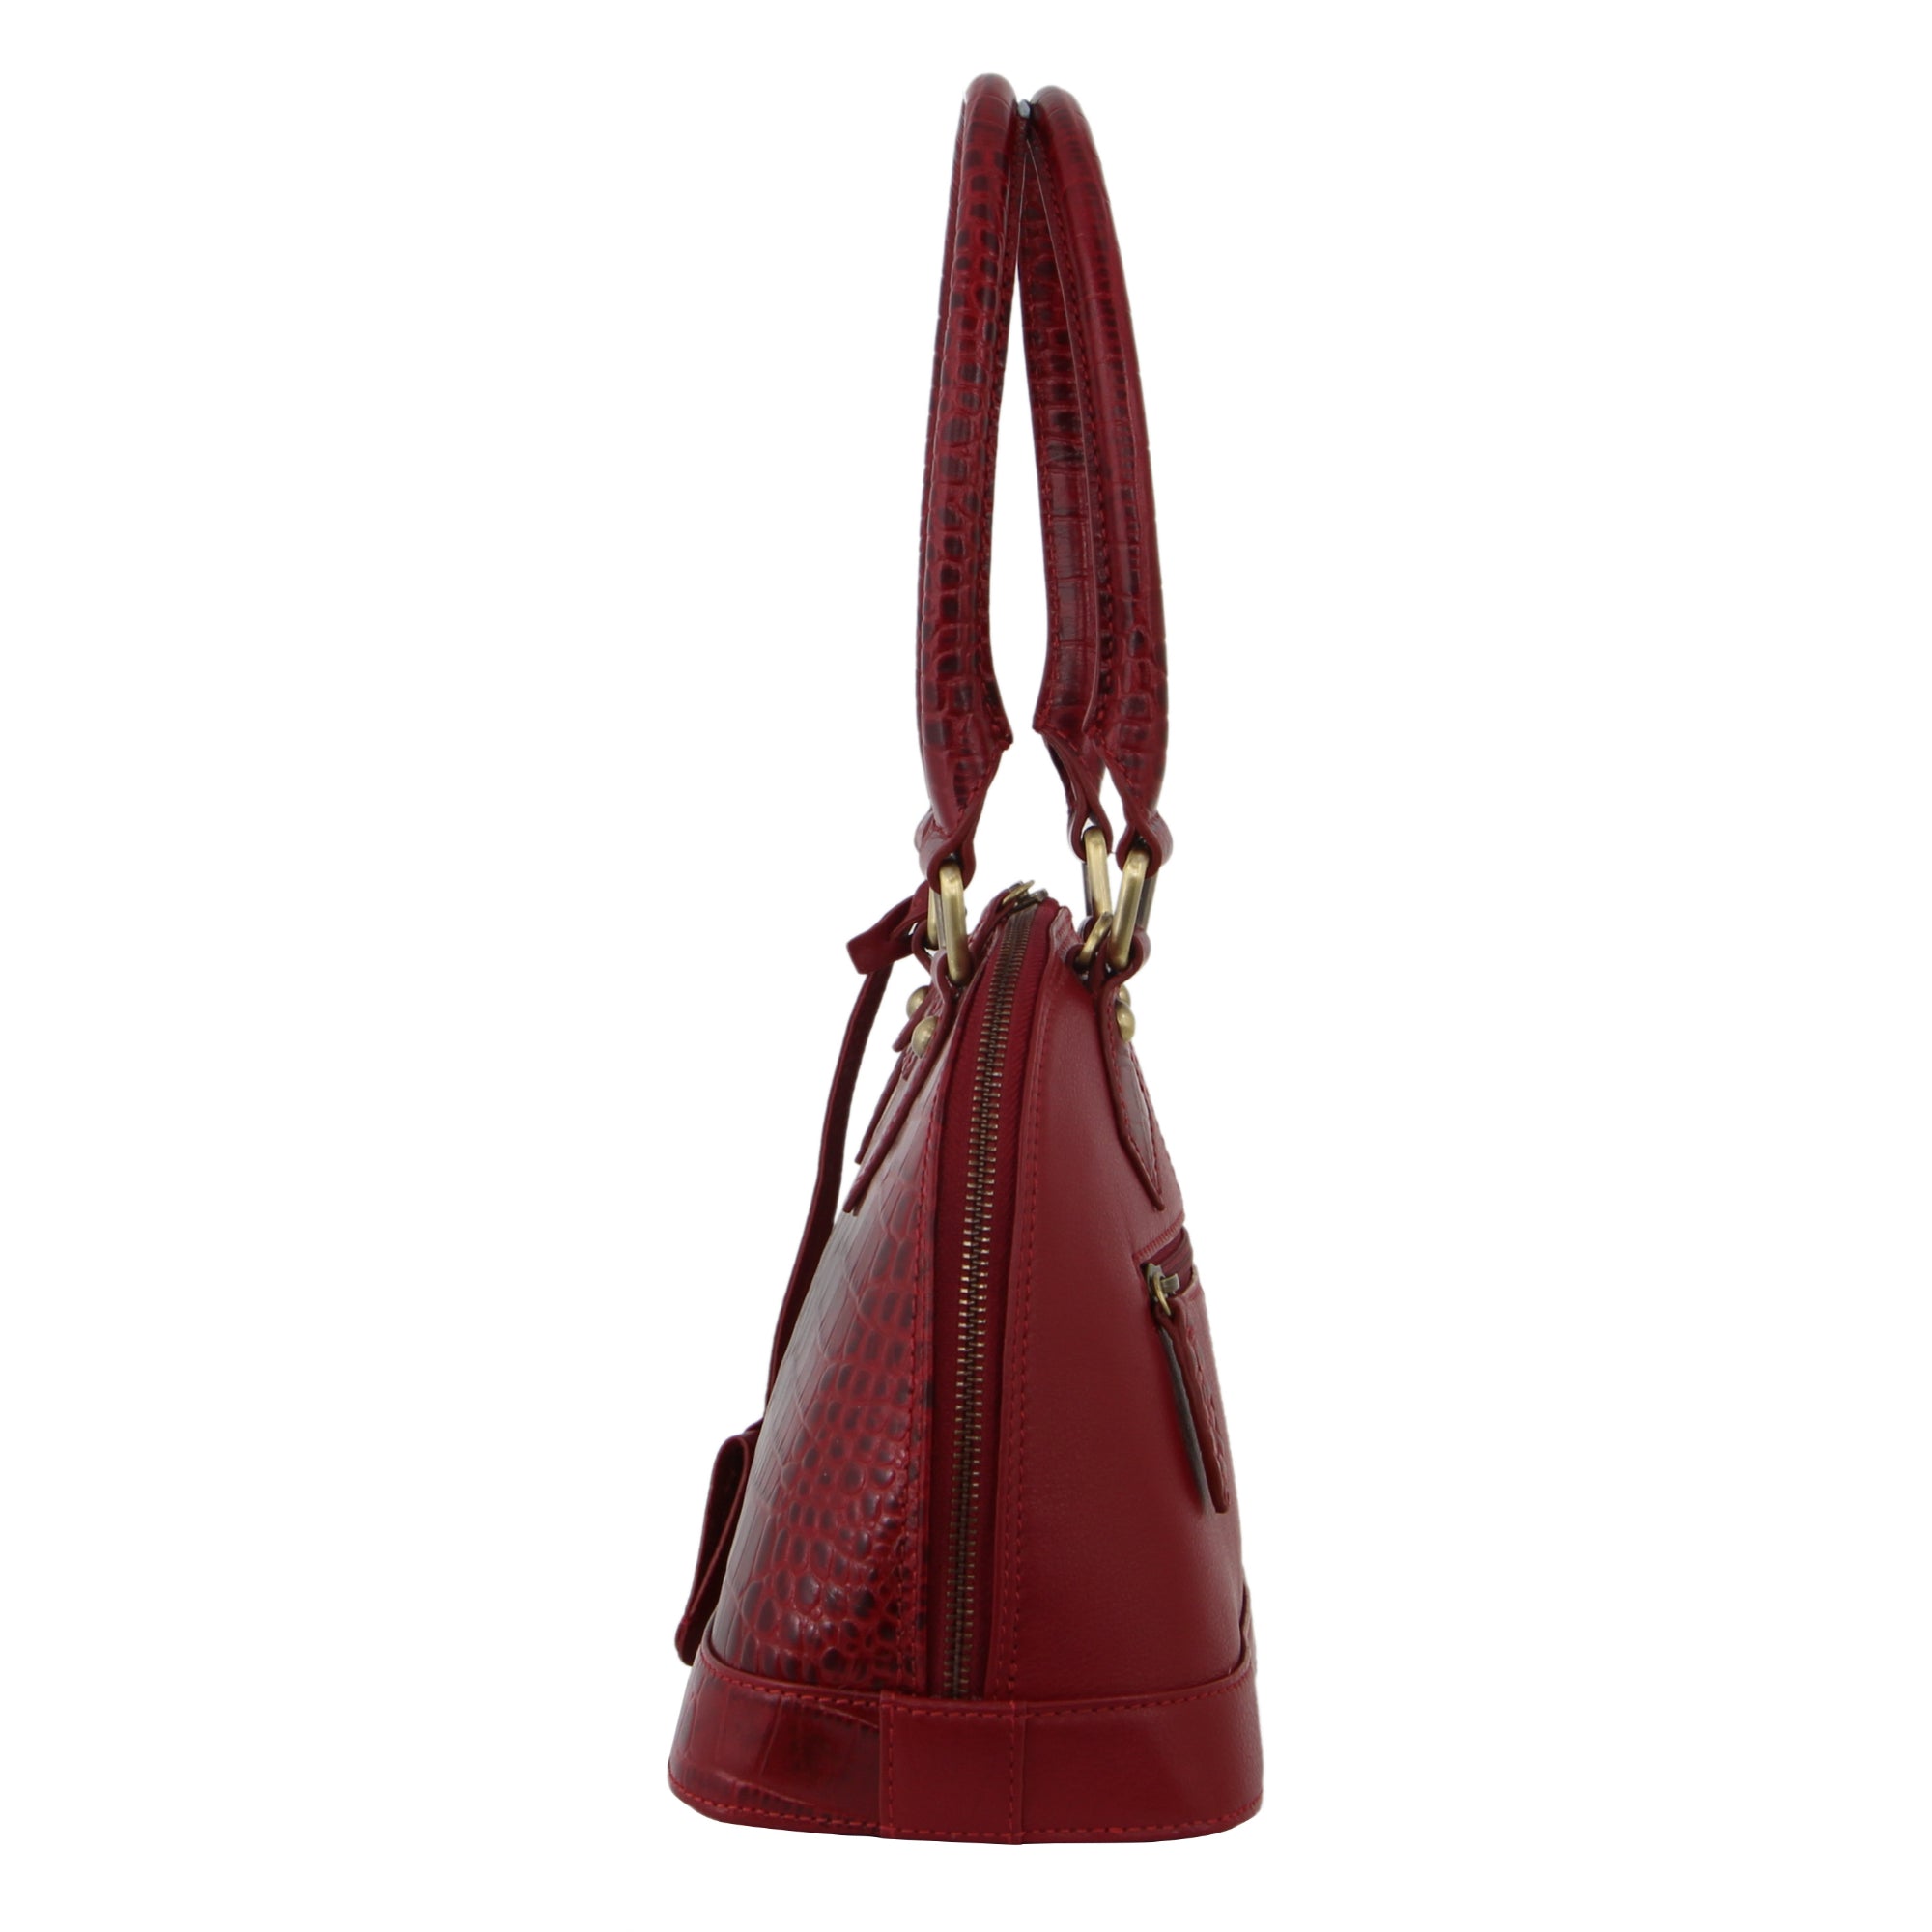 Pierre Cardin Croc-Embossed Leather Handbag in Red